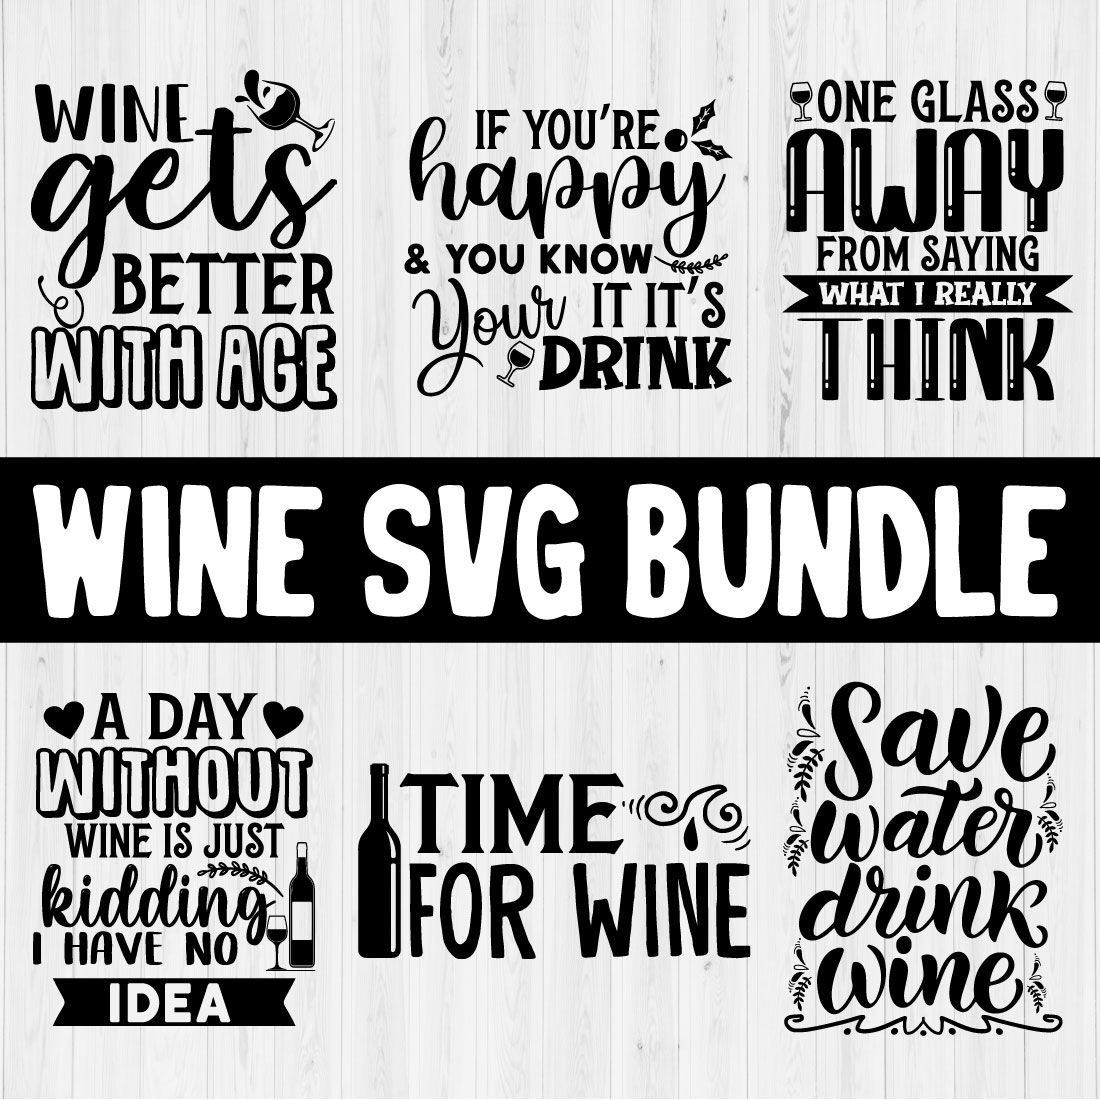 Wine SVG Quotes Design Bundle Vol.5 main cover